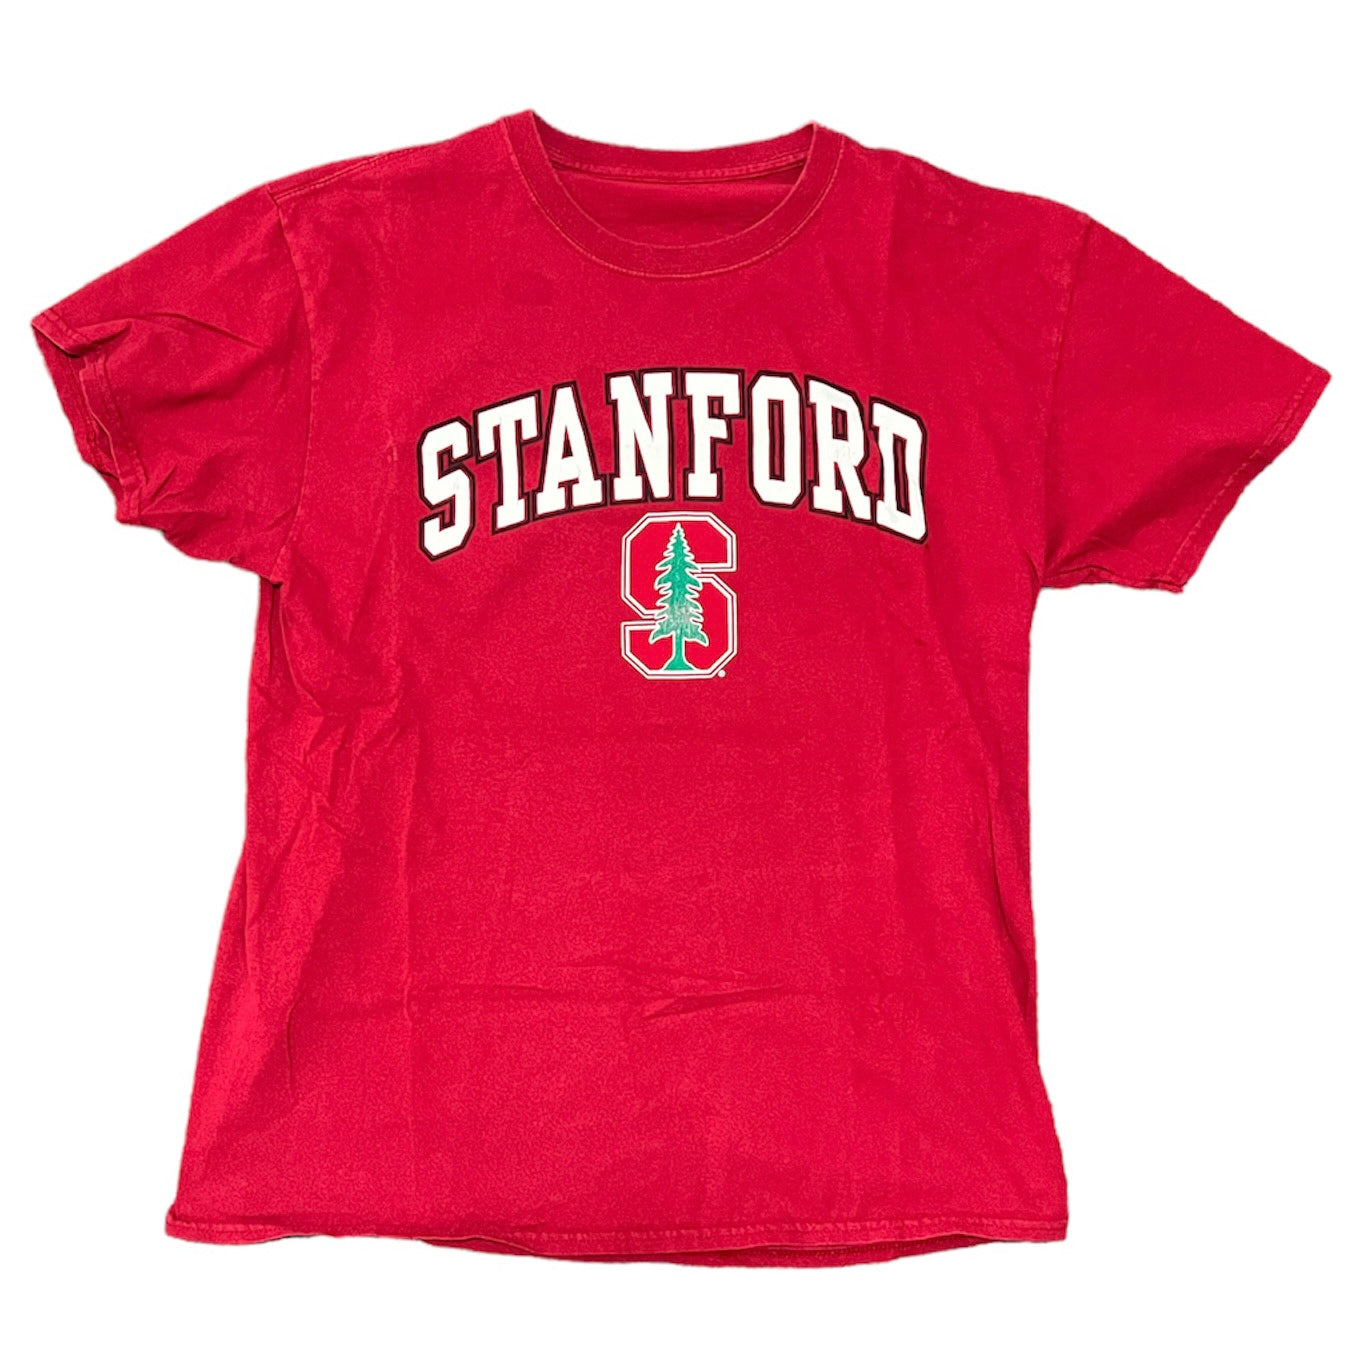 Stanford University T-Shirt Size Large